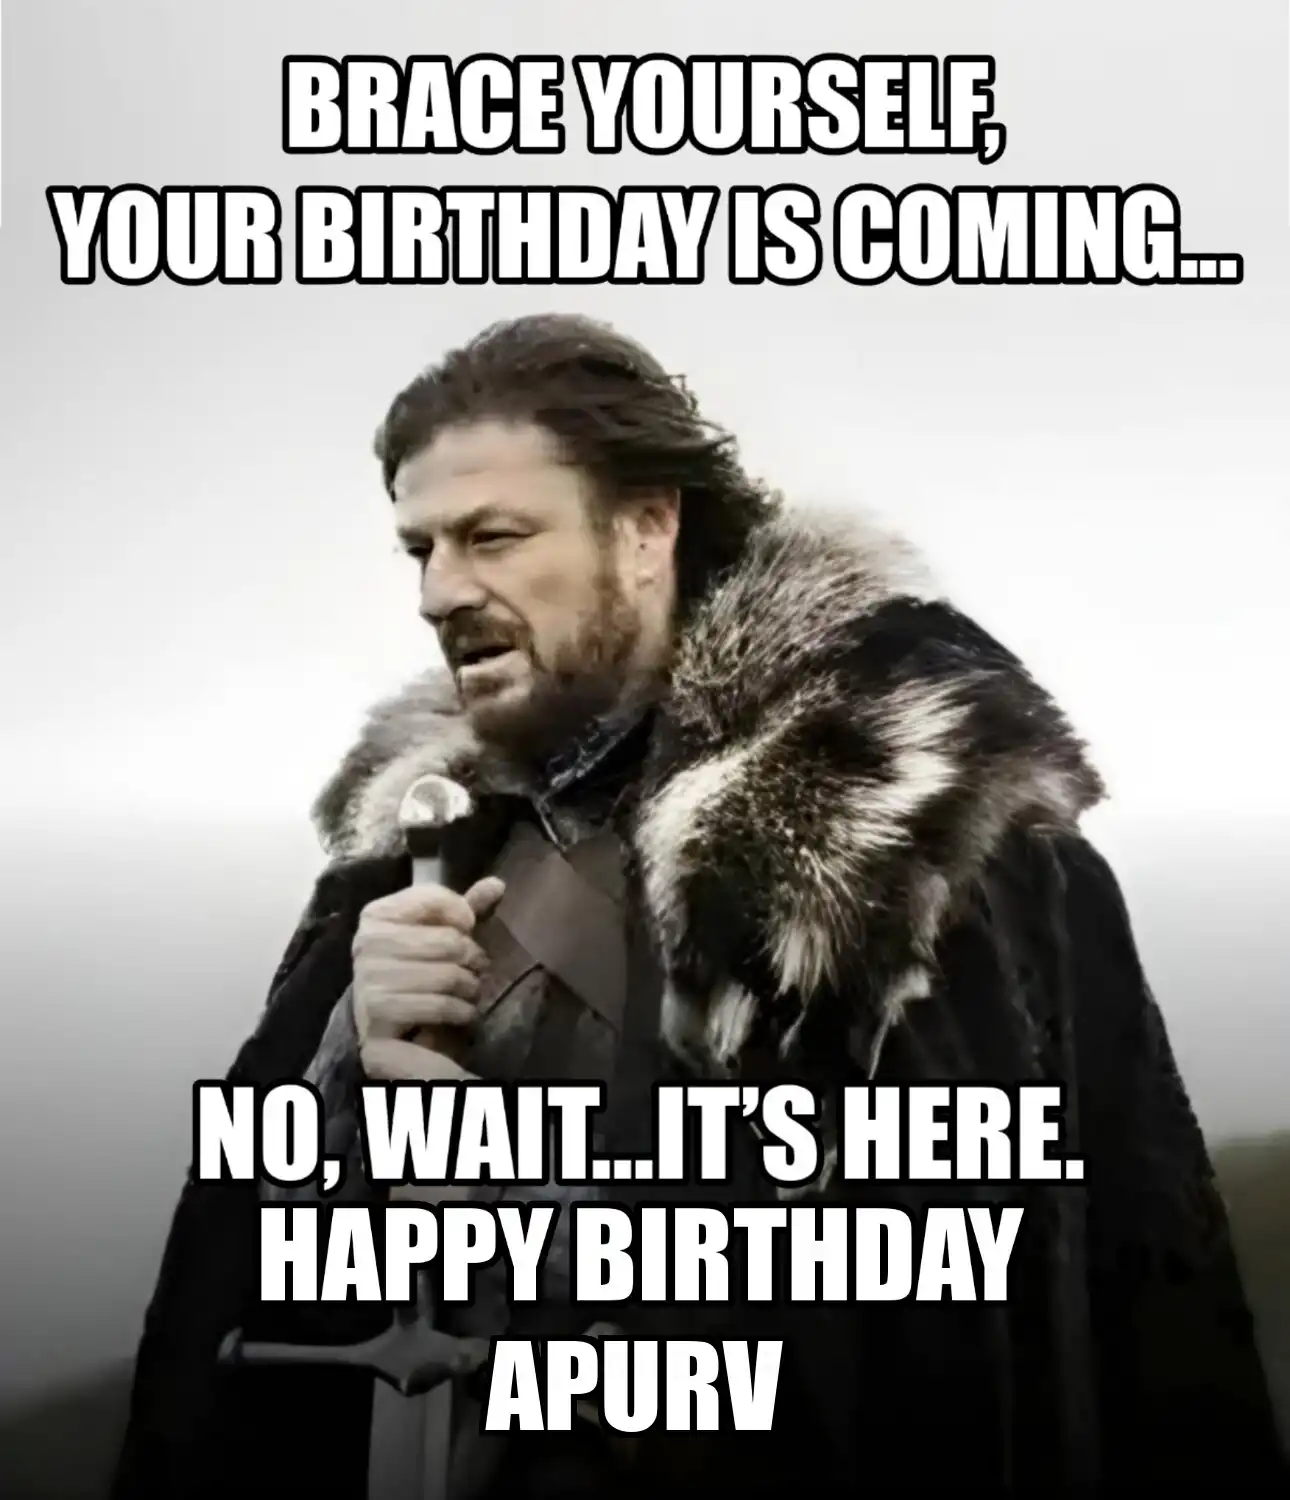 Happy Birthday Apurv Brace Yourself Your Birthday Is Coming Meme